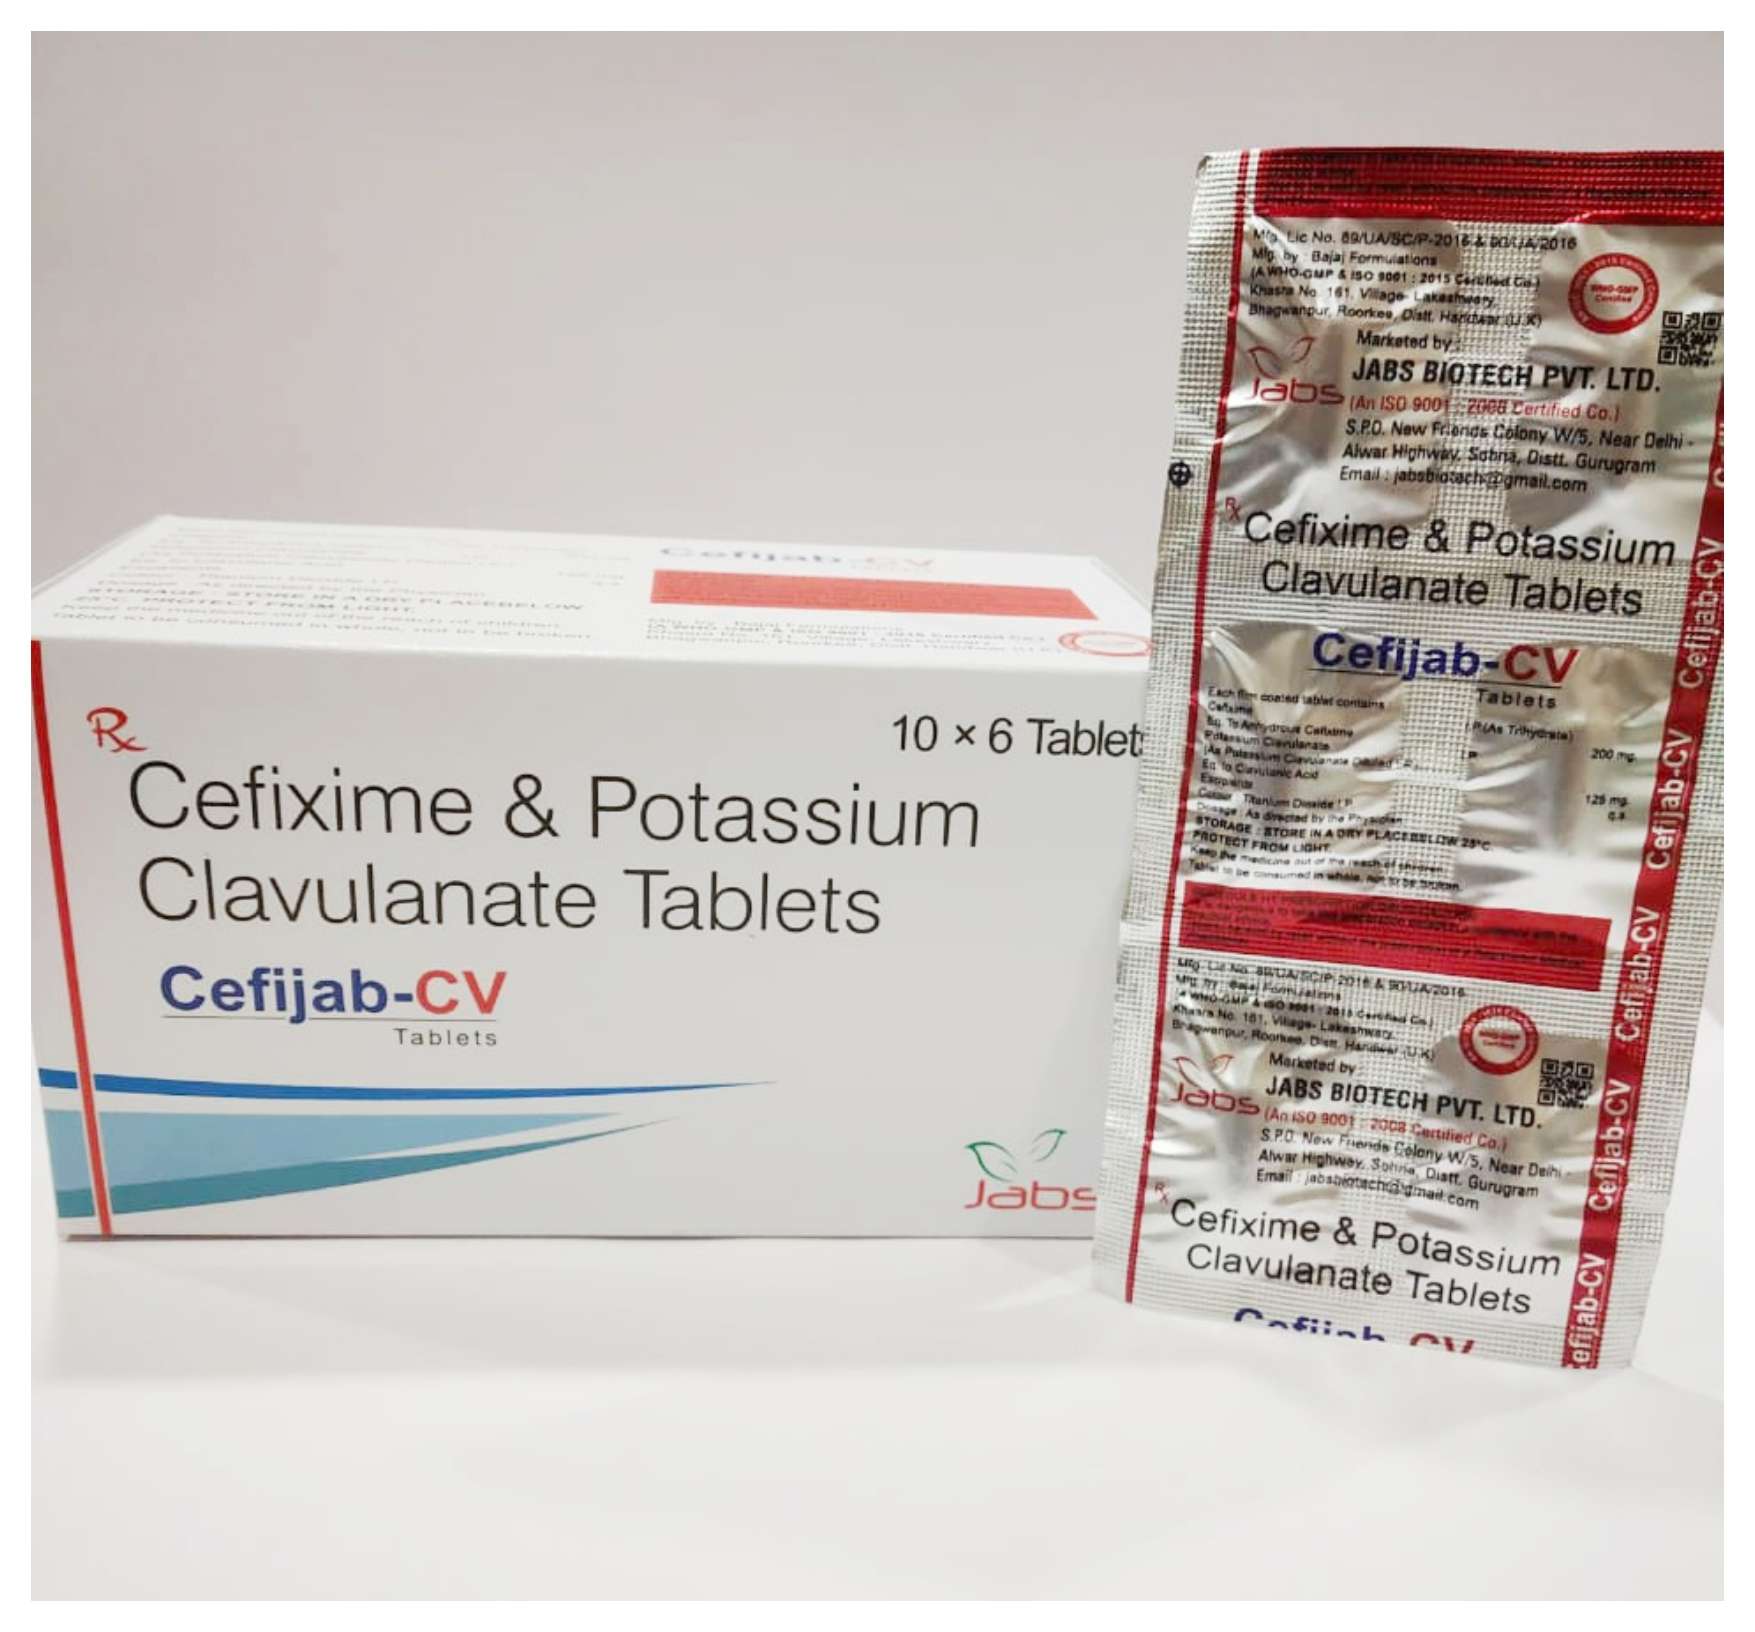 cefixime-200mg + potassium clavulanate -125 mg